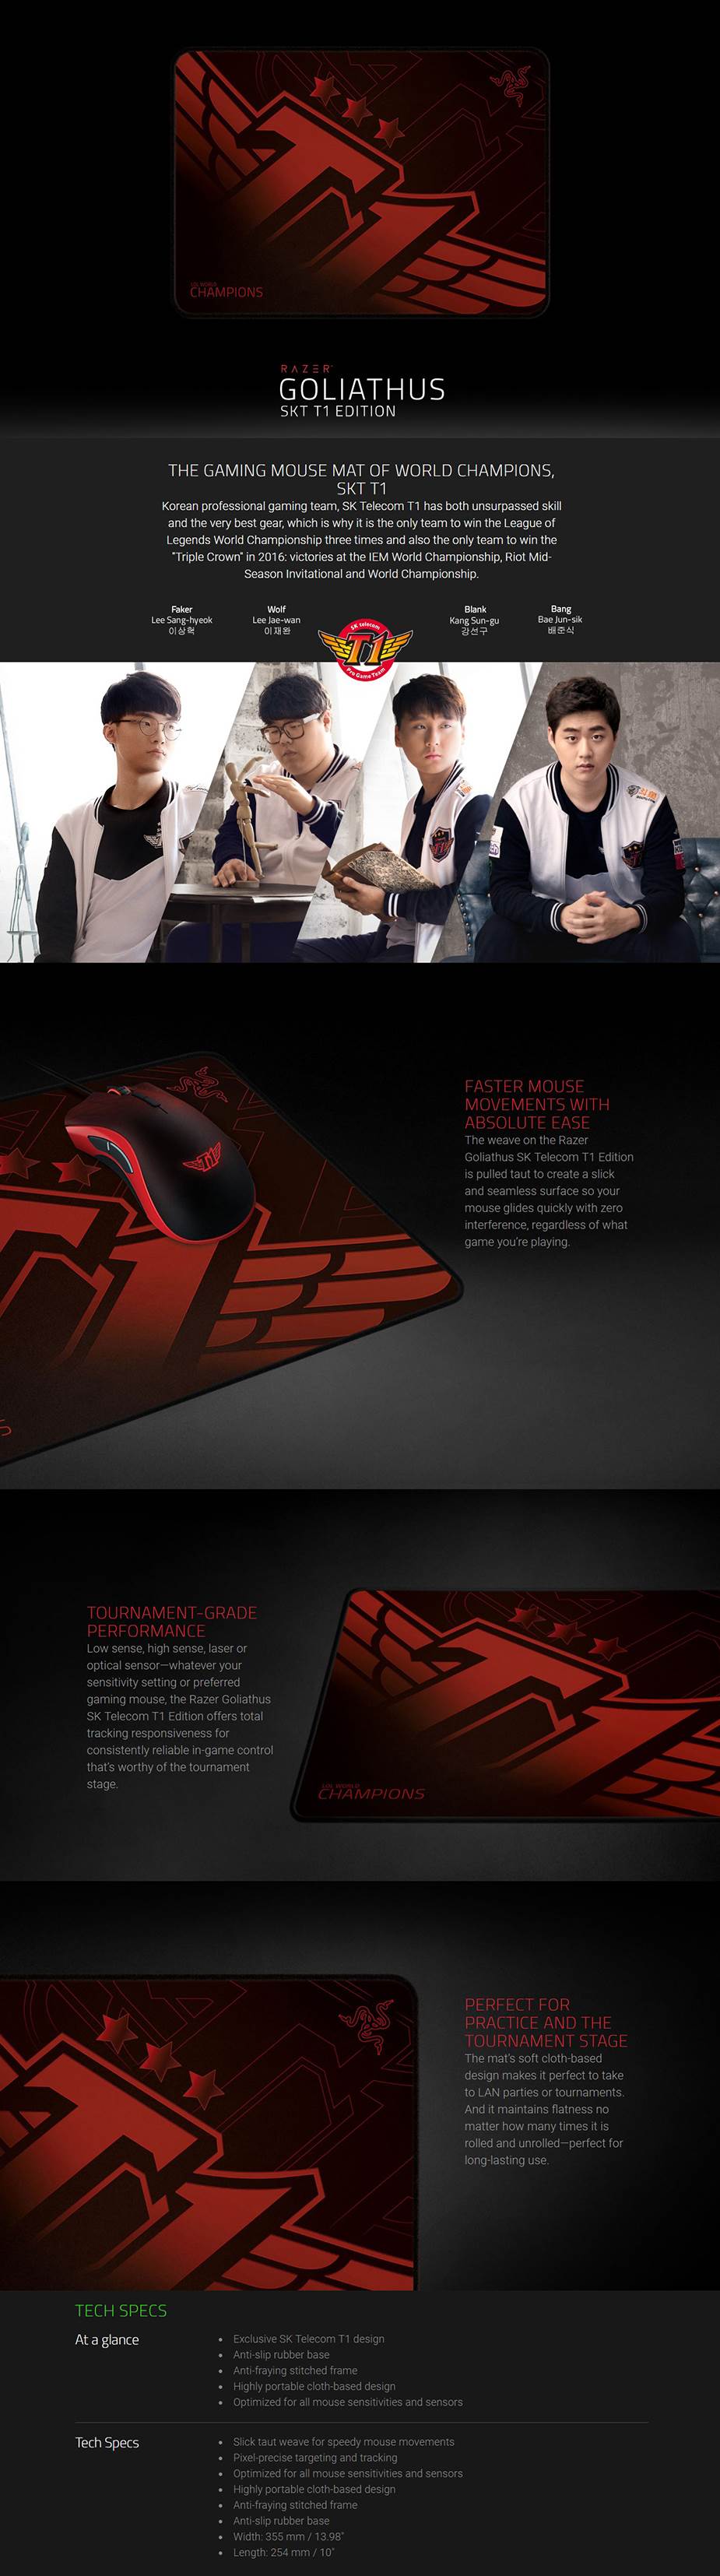 Razer Goliathus SKT T1 Edition Gaming Mouse Mat Details